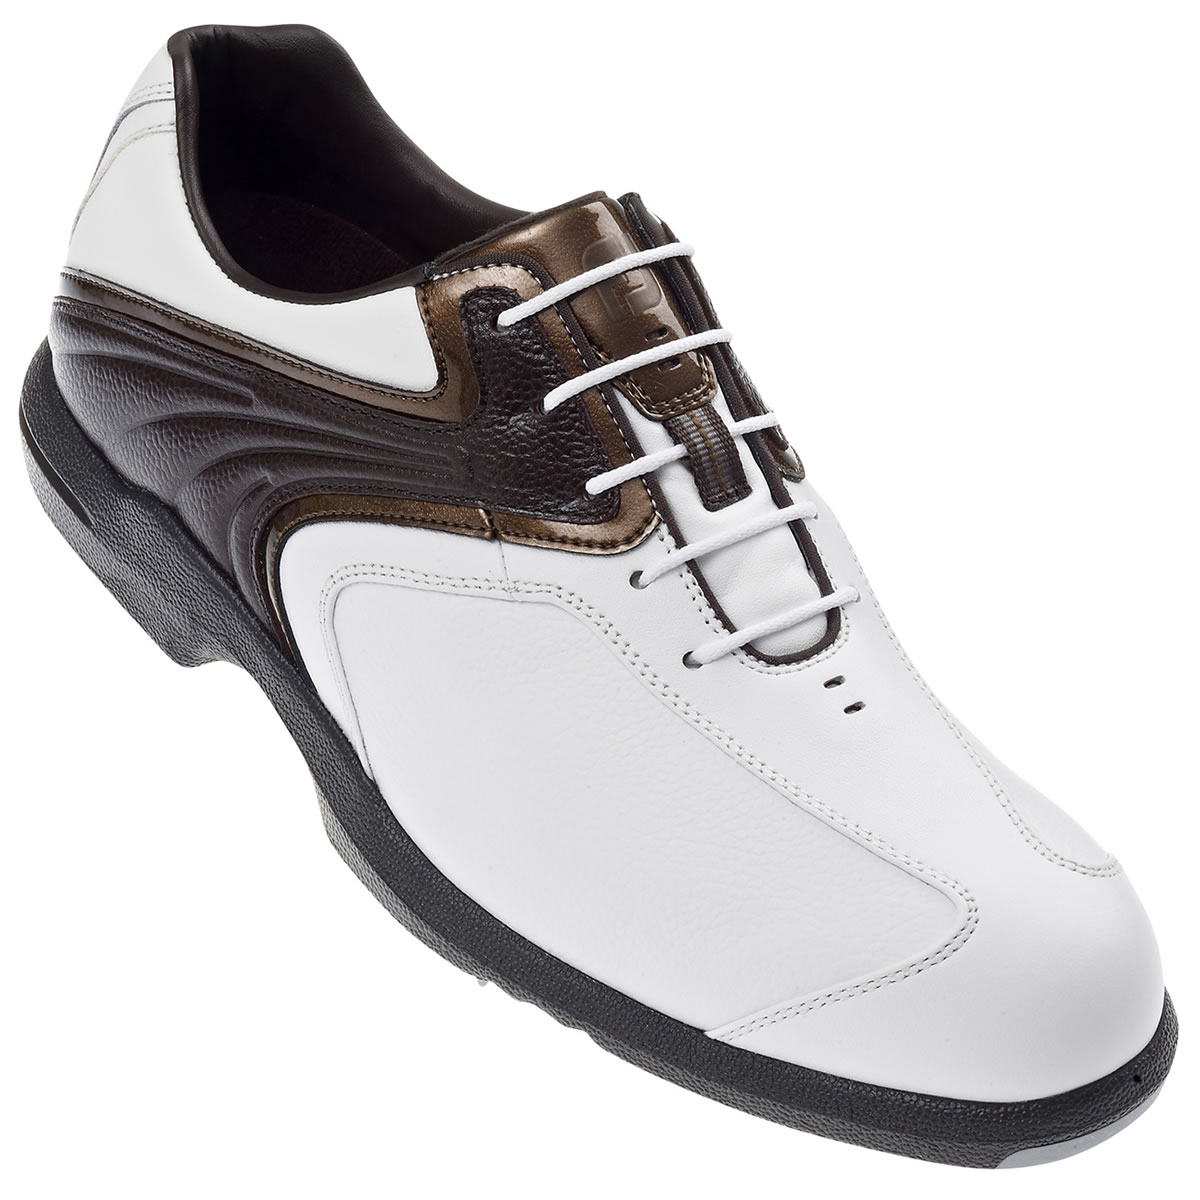 FootJoy AQL Golf Shoes White/Dark Brown #52679